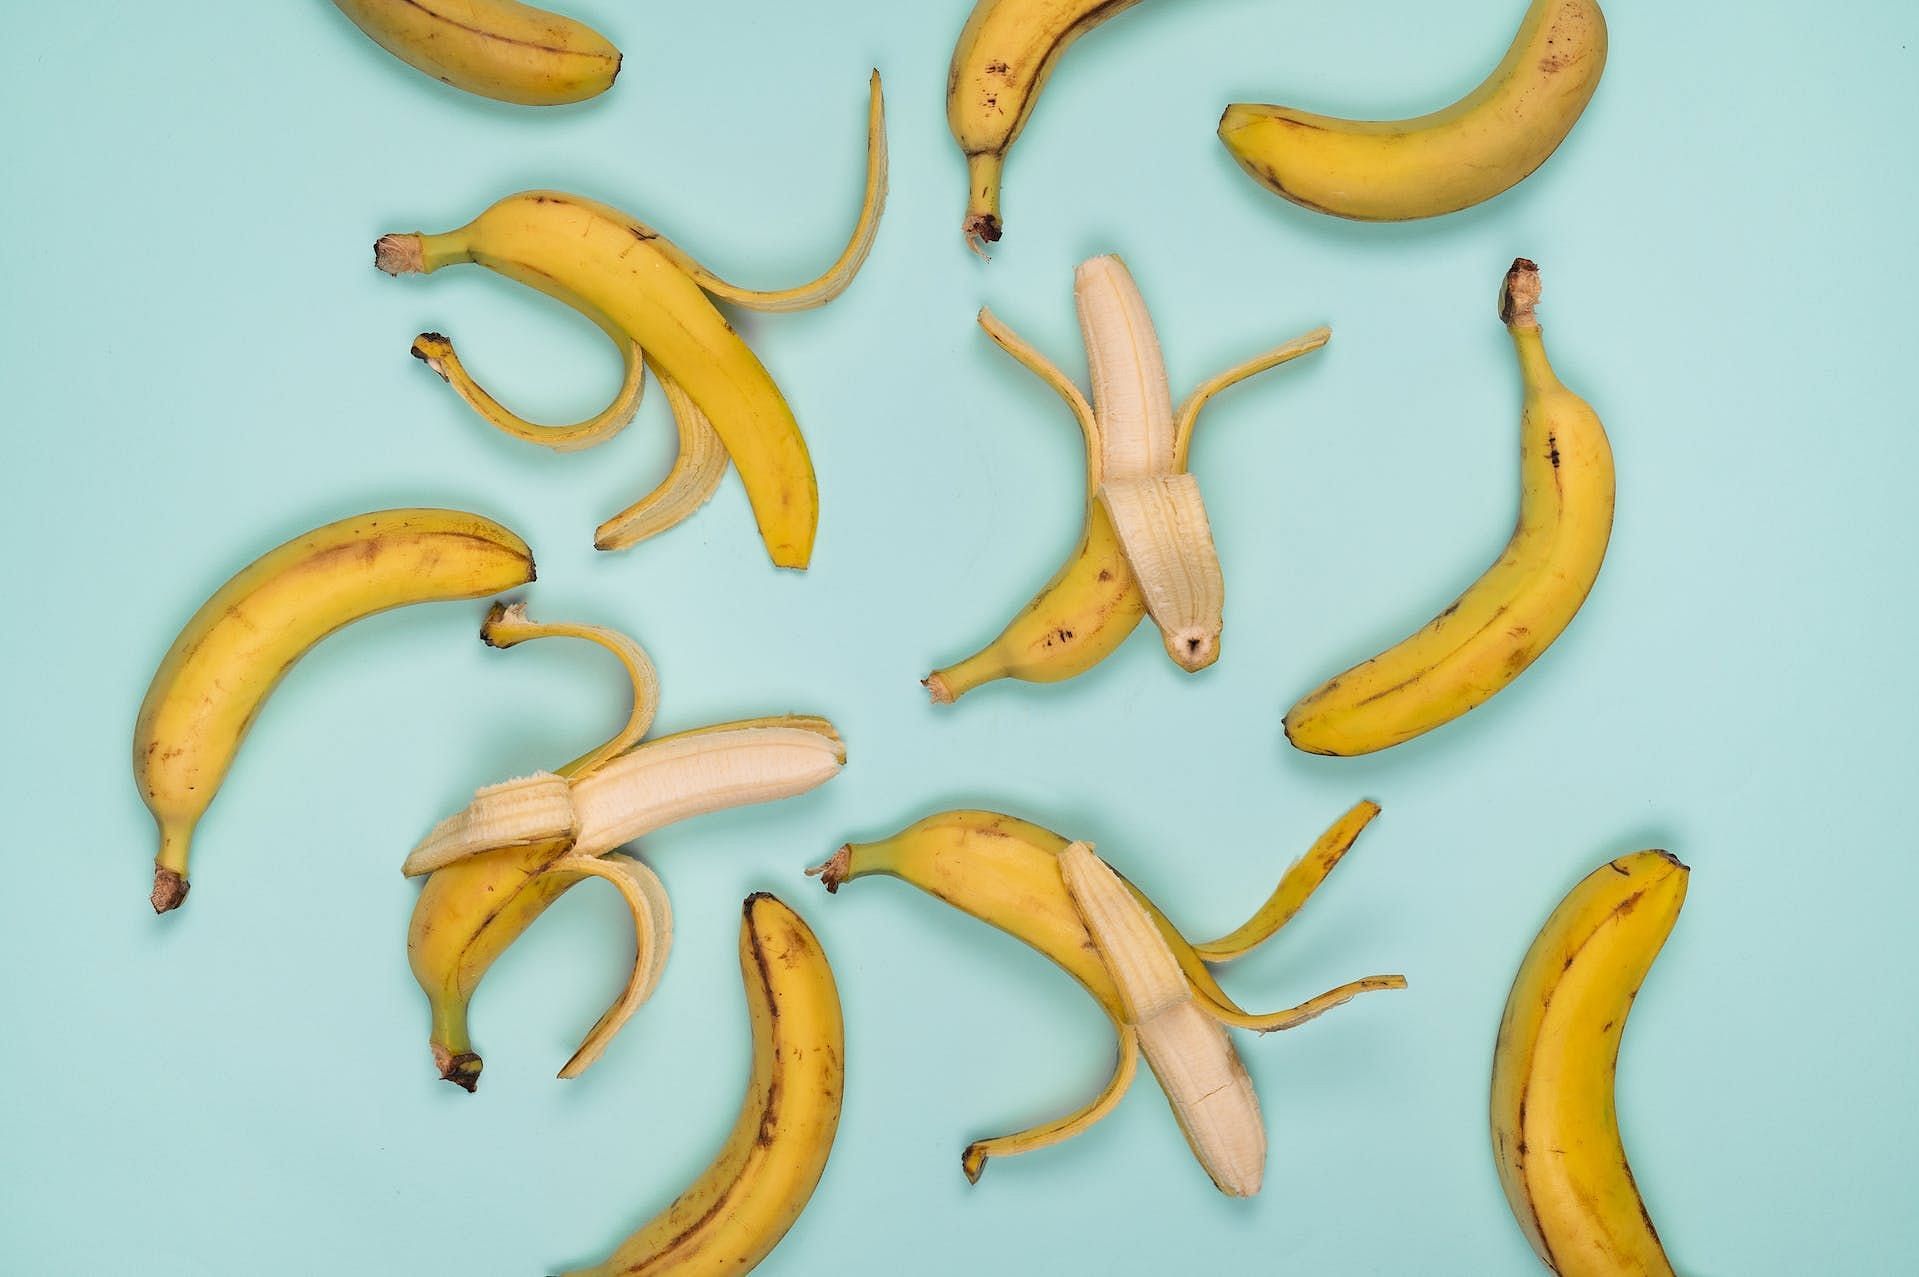 Banana peels contain antimicrobial properties. (Image via Pexels/SHVETS production)